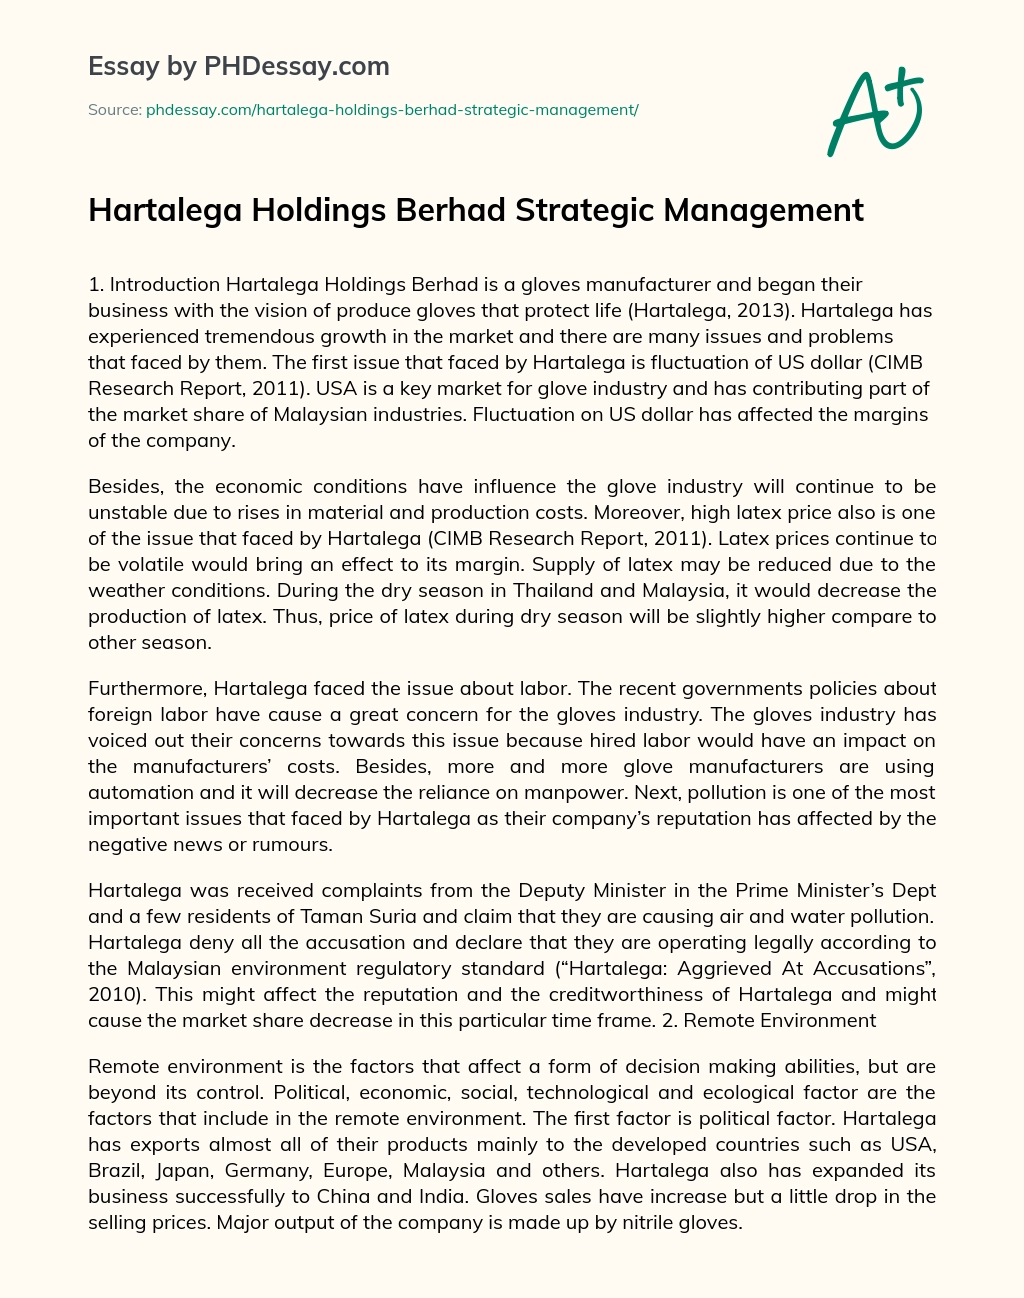 Hartalega Holdings Berhad Strategic Management essay